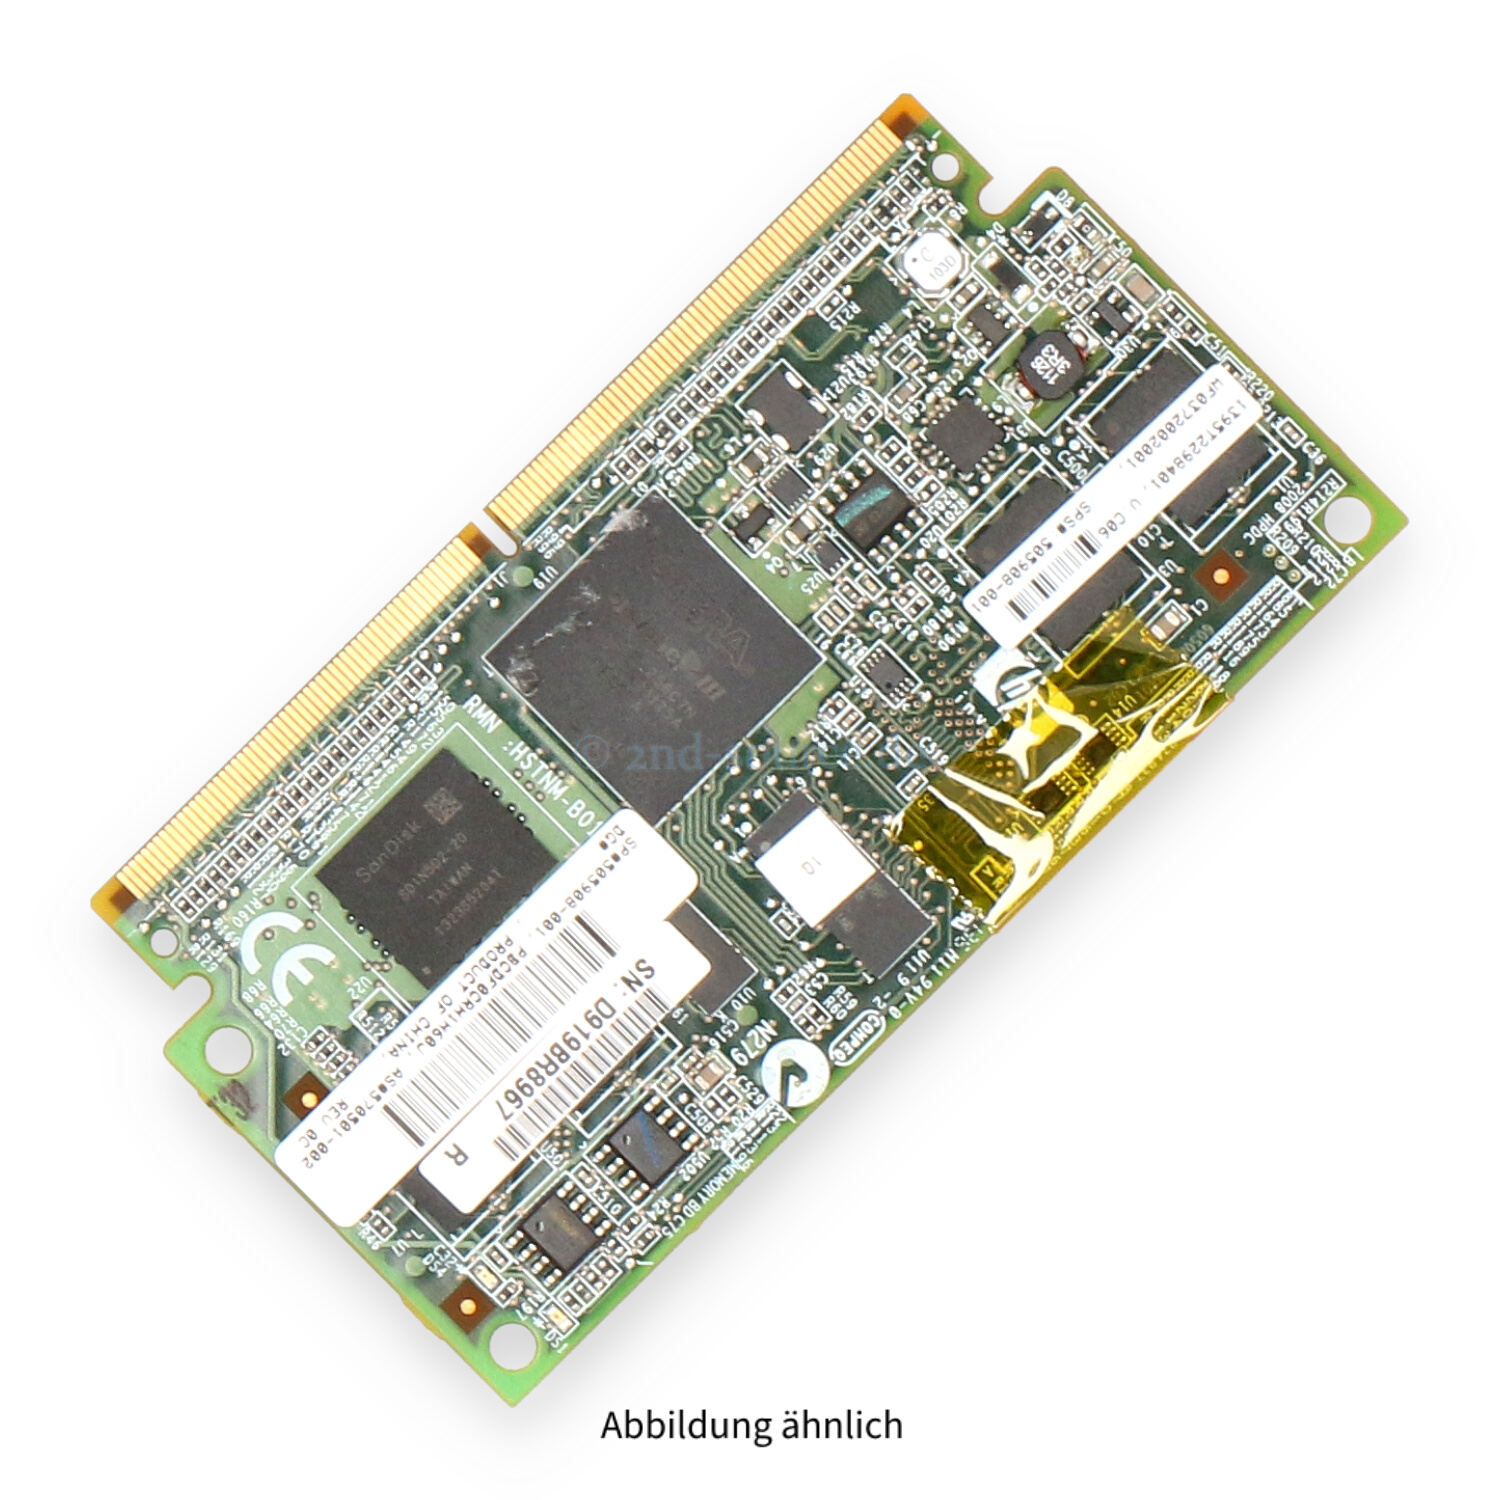 HPE 1GB FBWC Flash Backed Write Cache Memory Module 505908-001